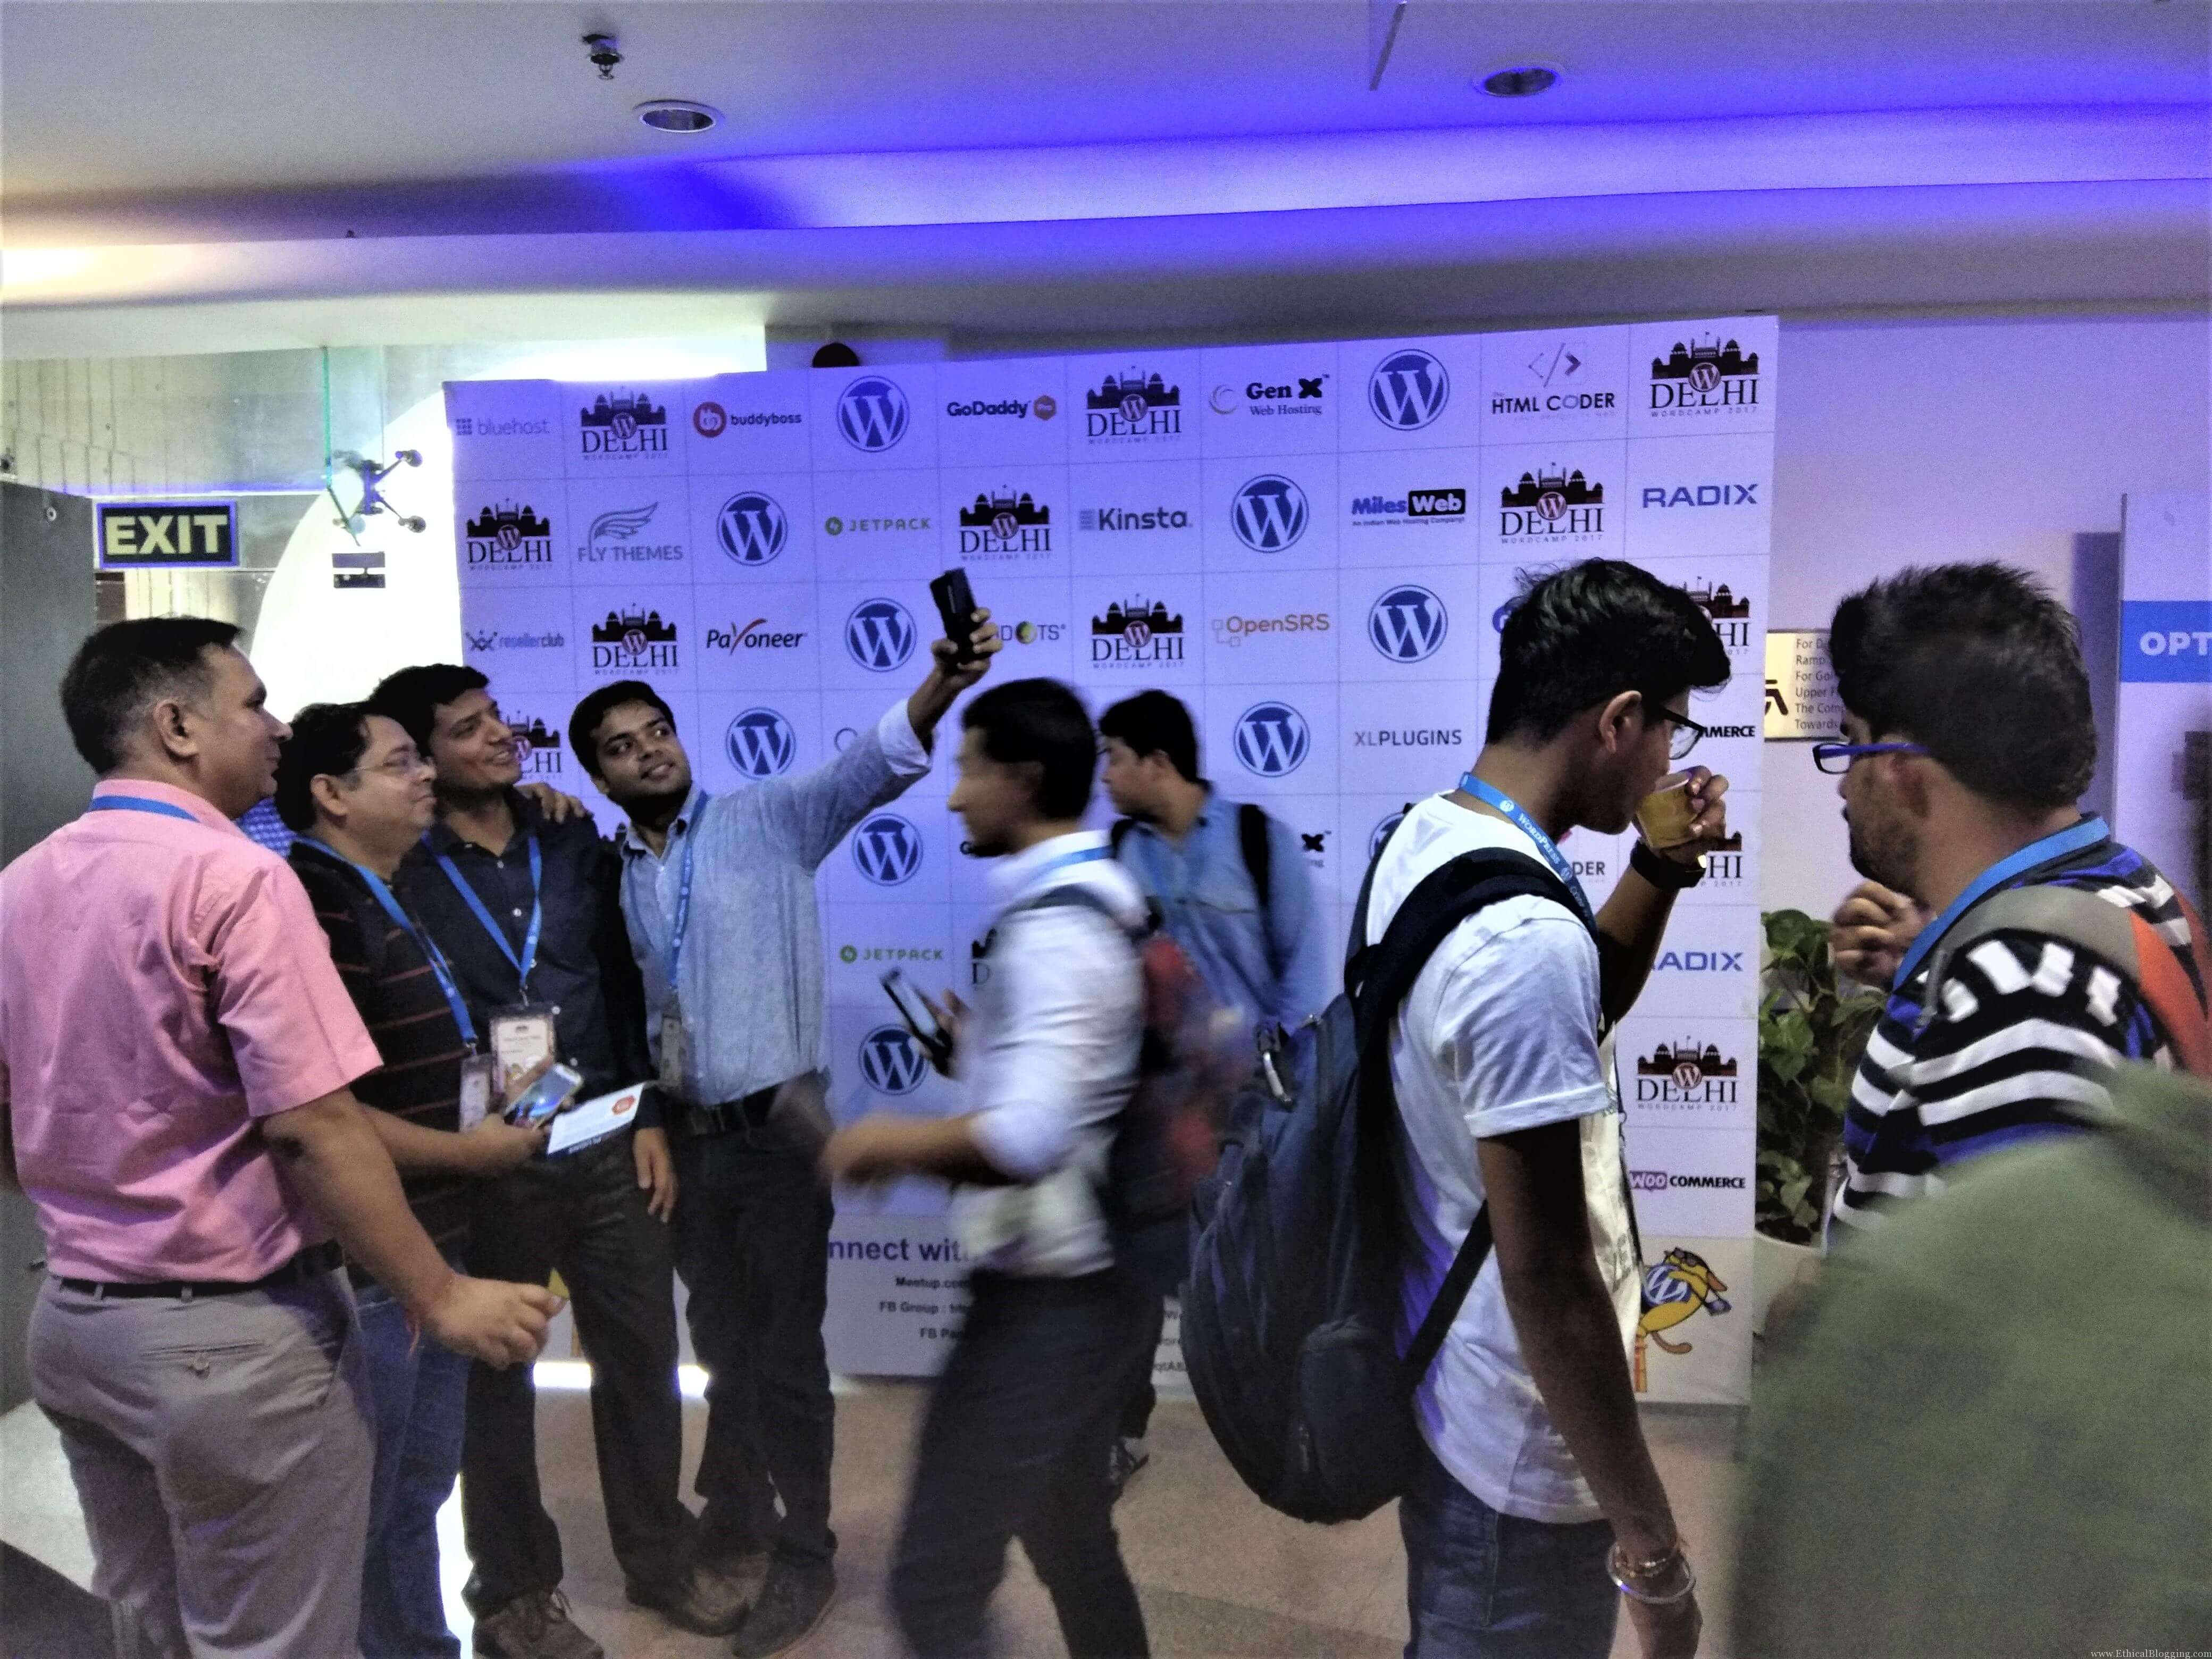 People are Enjoying Themselves [WordCamp Delhi 2017]